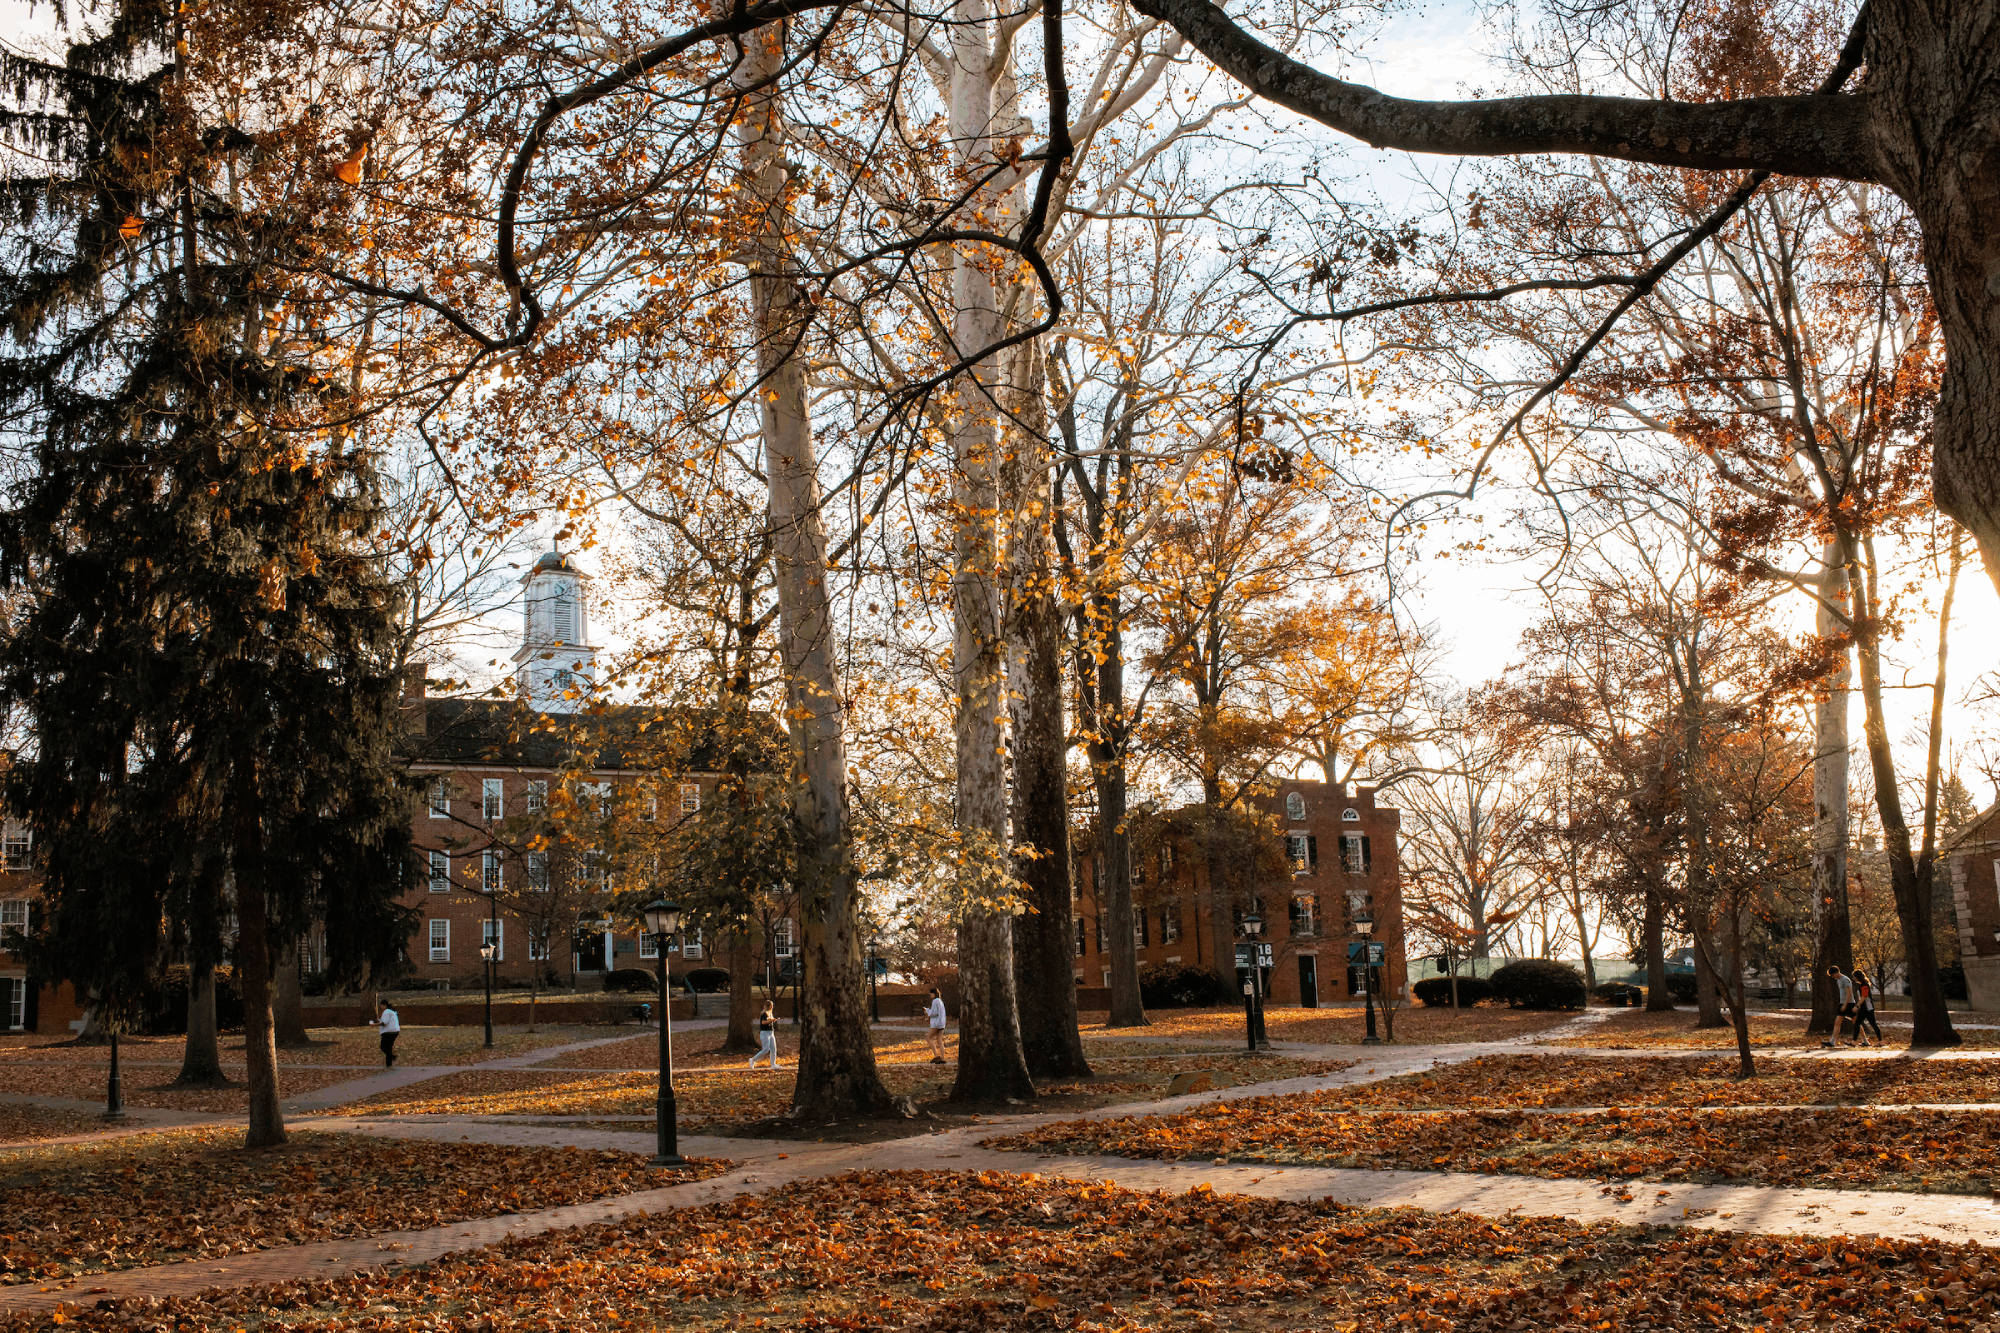 Fall colors at Ohio University